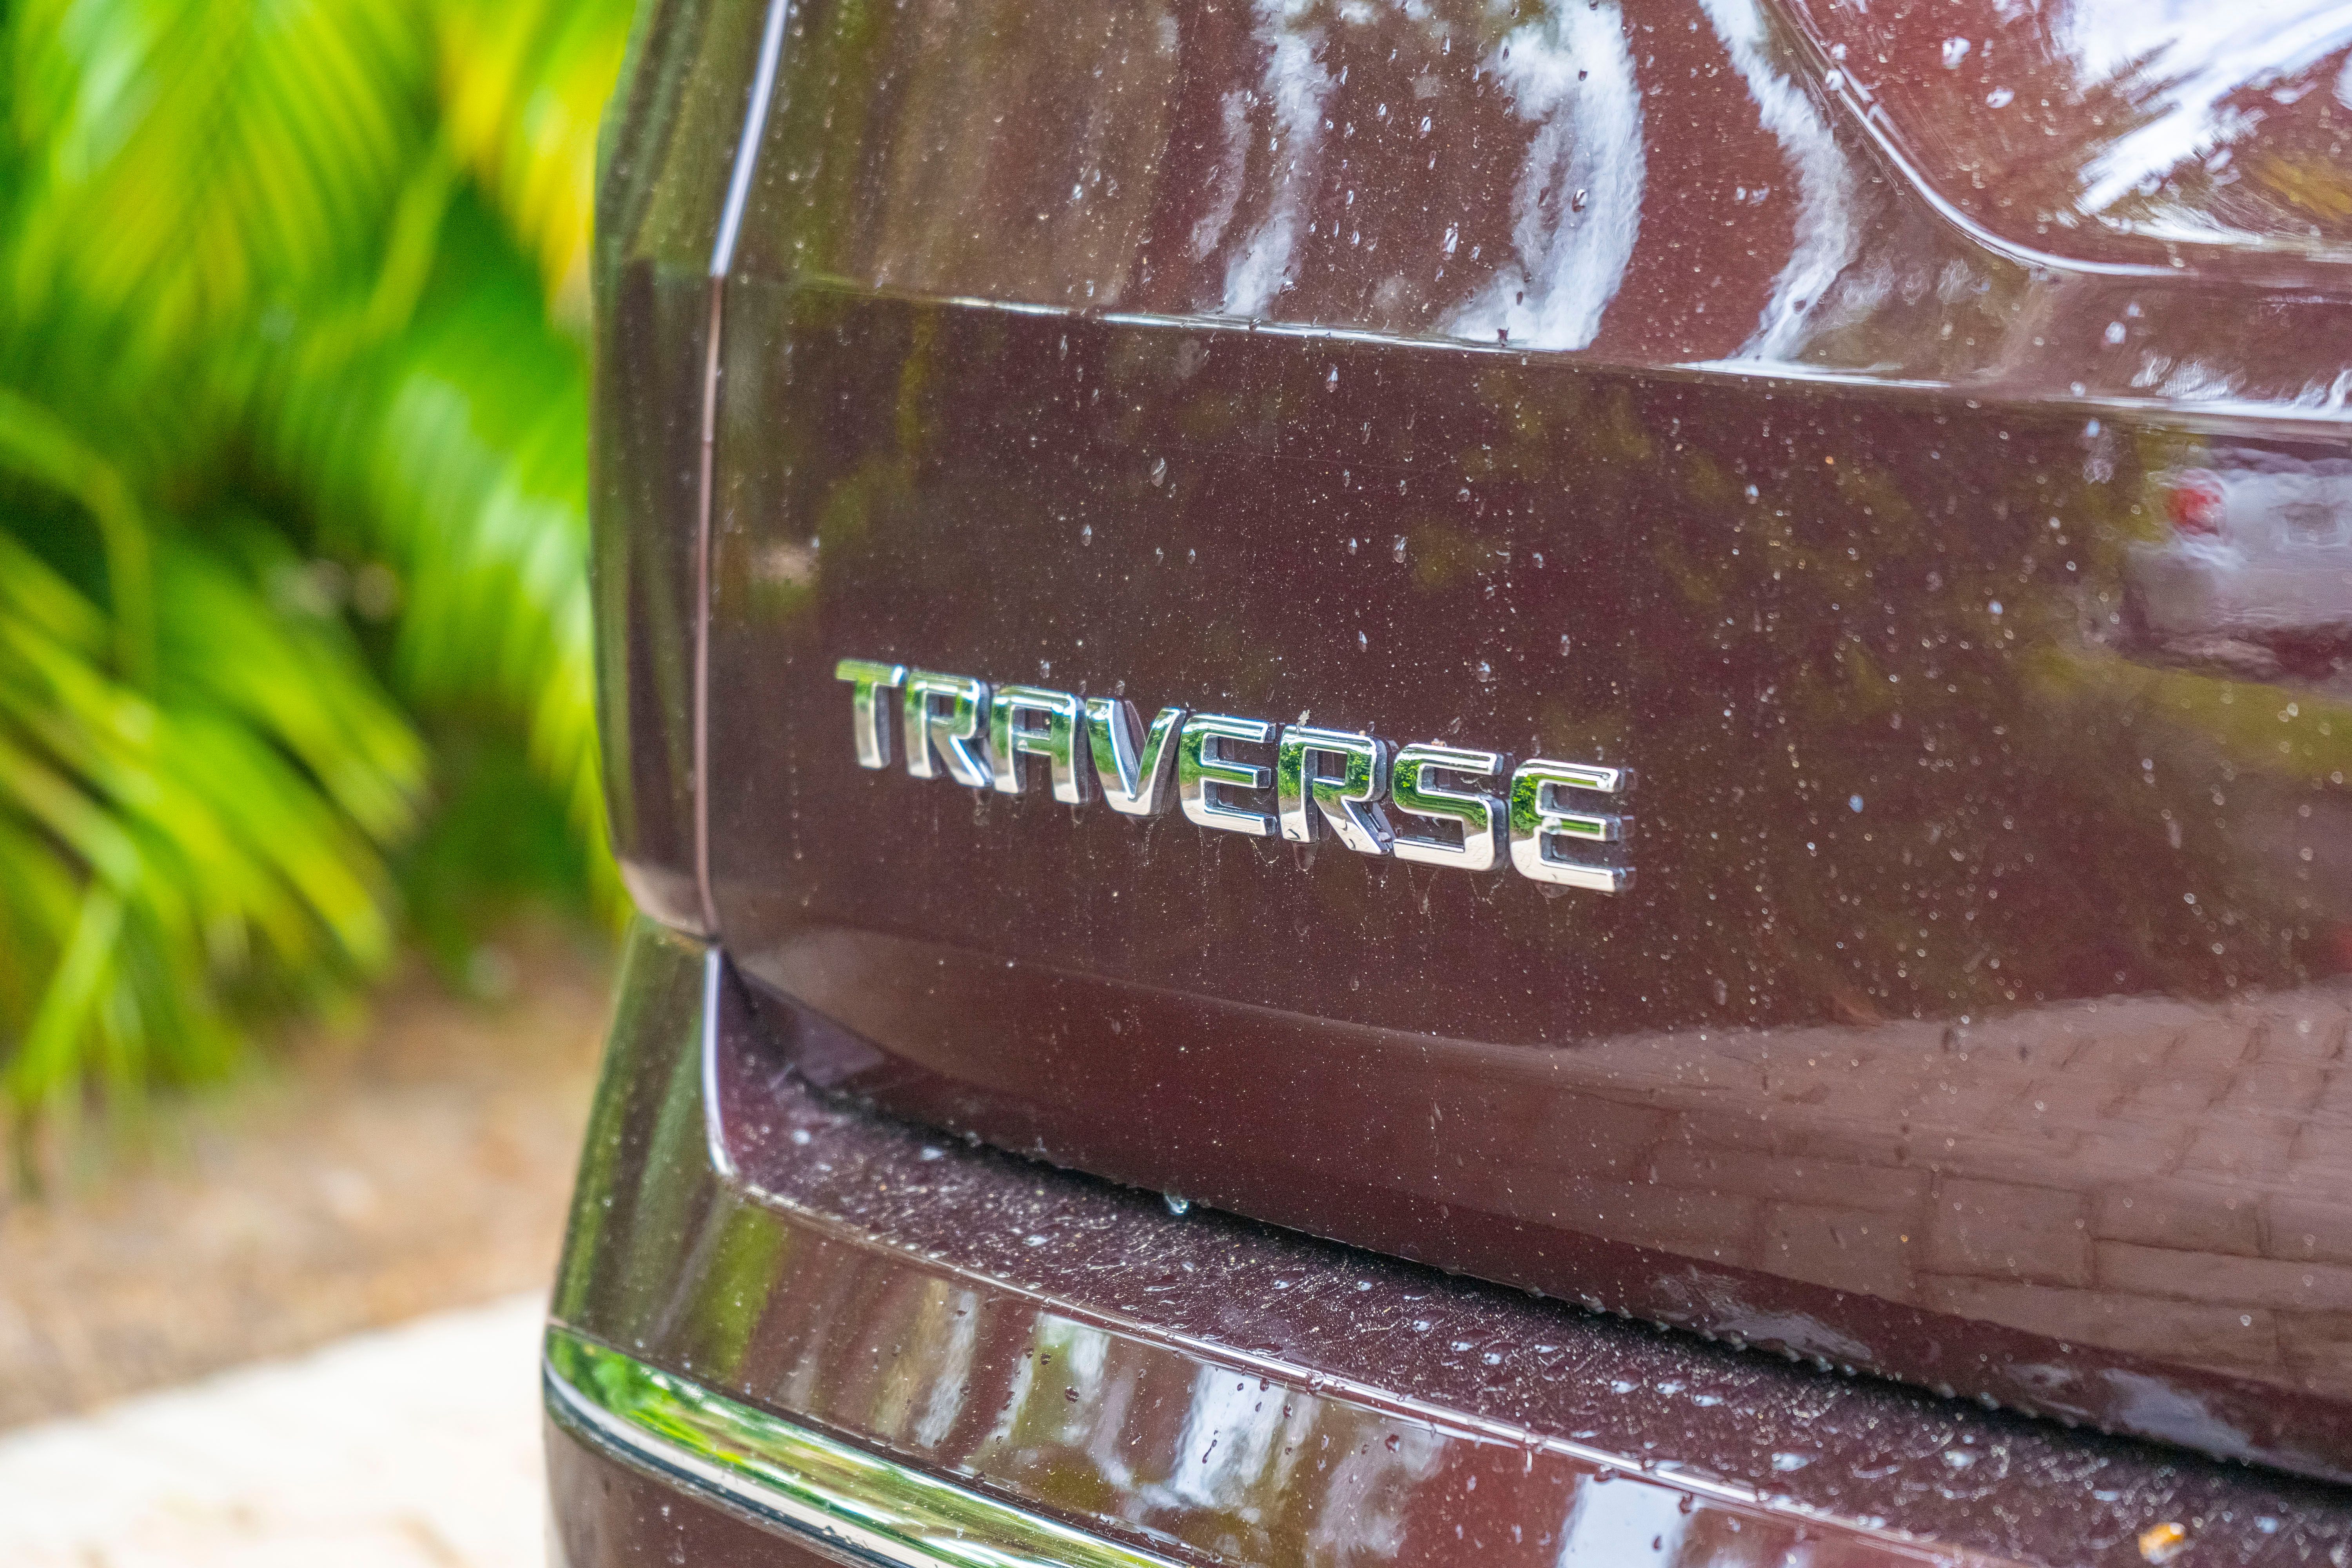 2020 Chevrolet Traverse - Driven